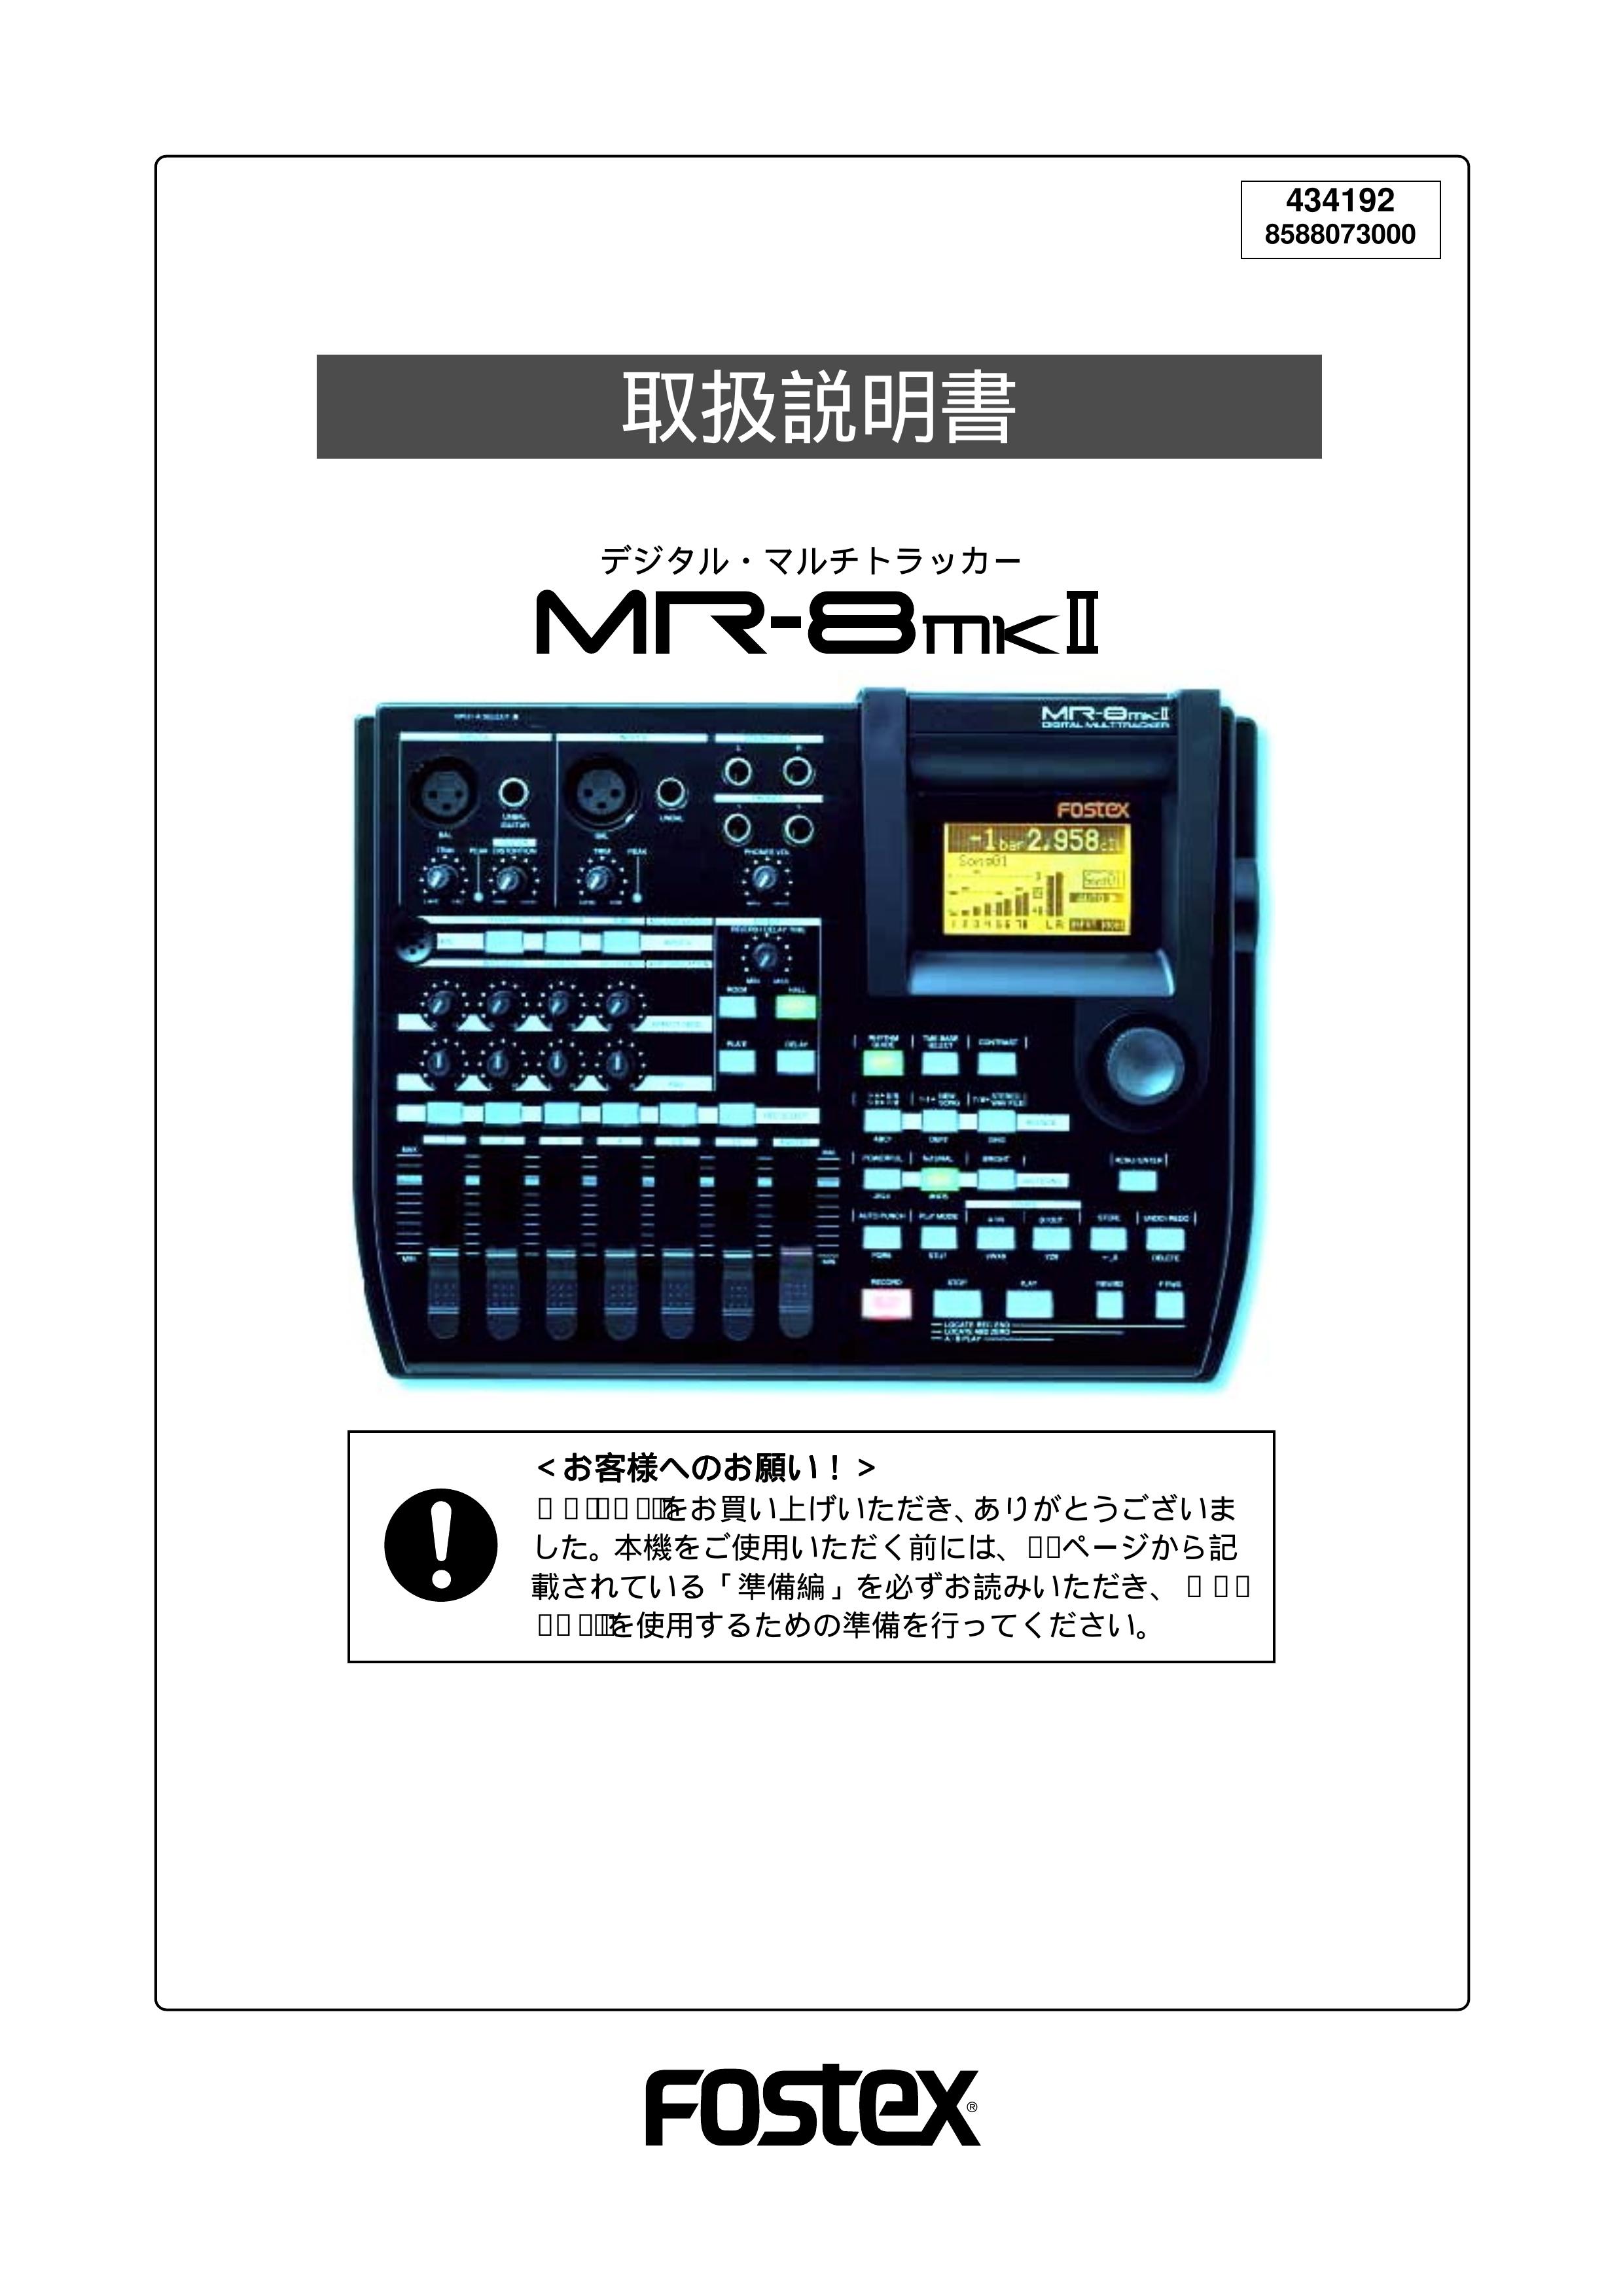 Fostex MR-8mkII Recording Equipment User Manual